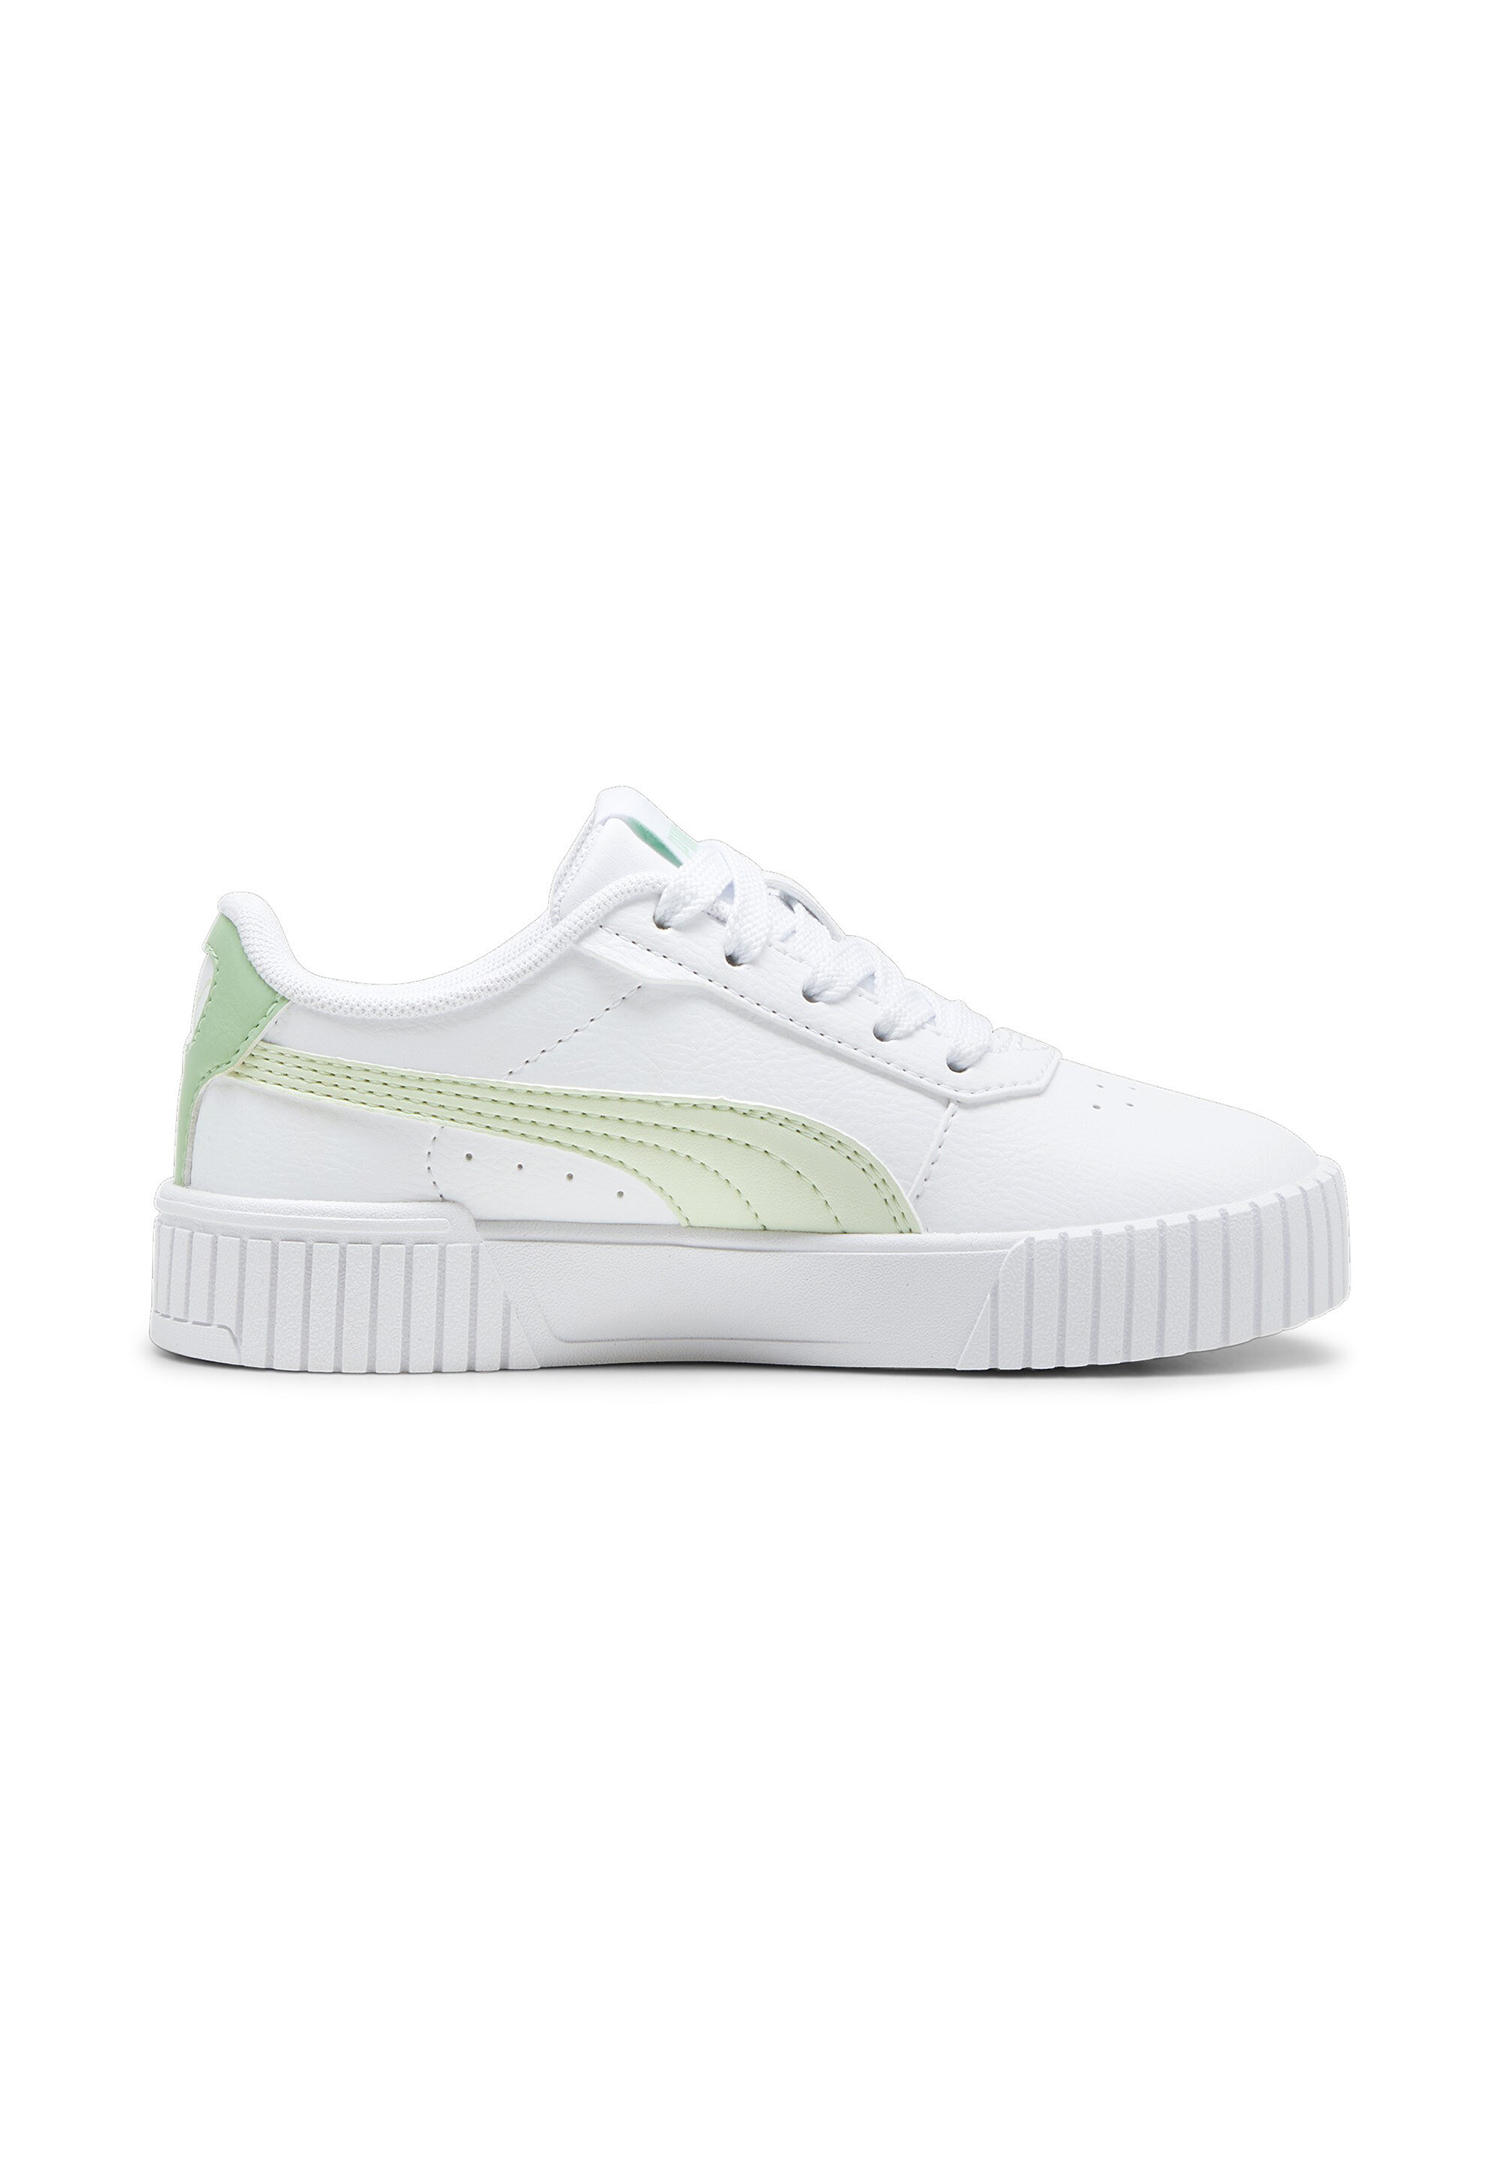 Puma Carina 2.0 PS Kinder Sneaker Schuhe 386186 15 weiß/grün